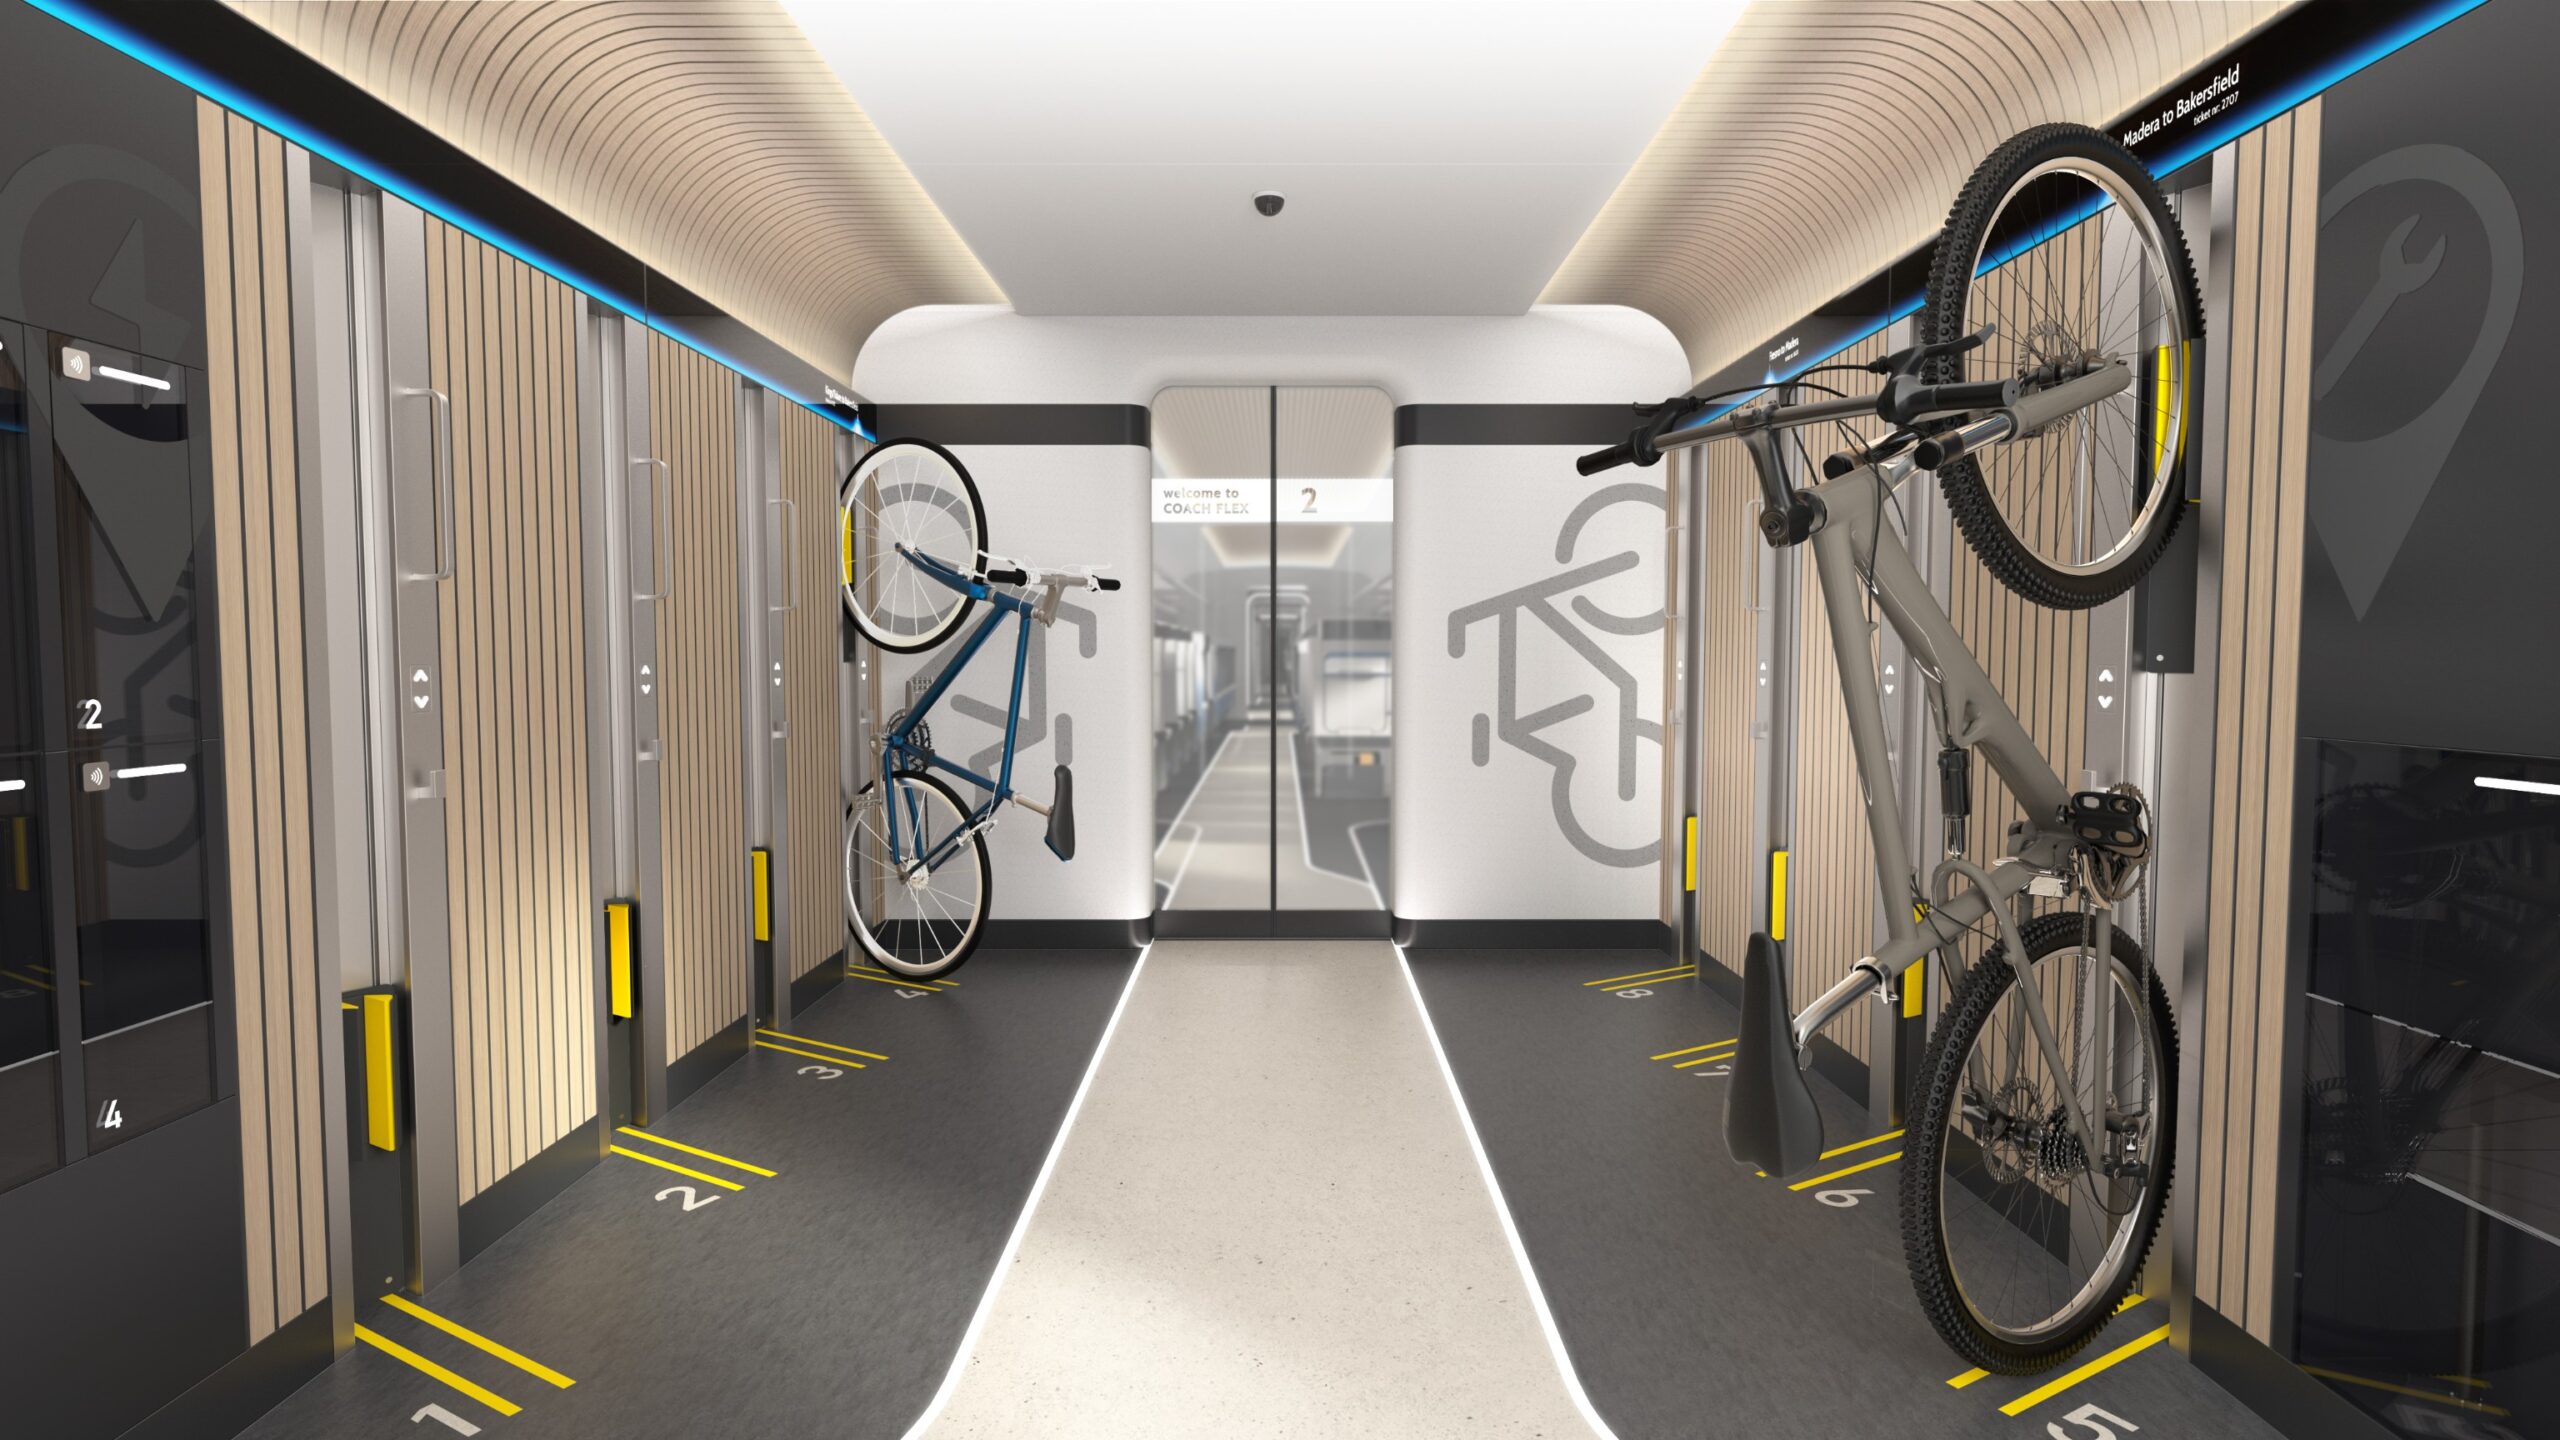 Bike storage onboard the new electric trains